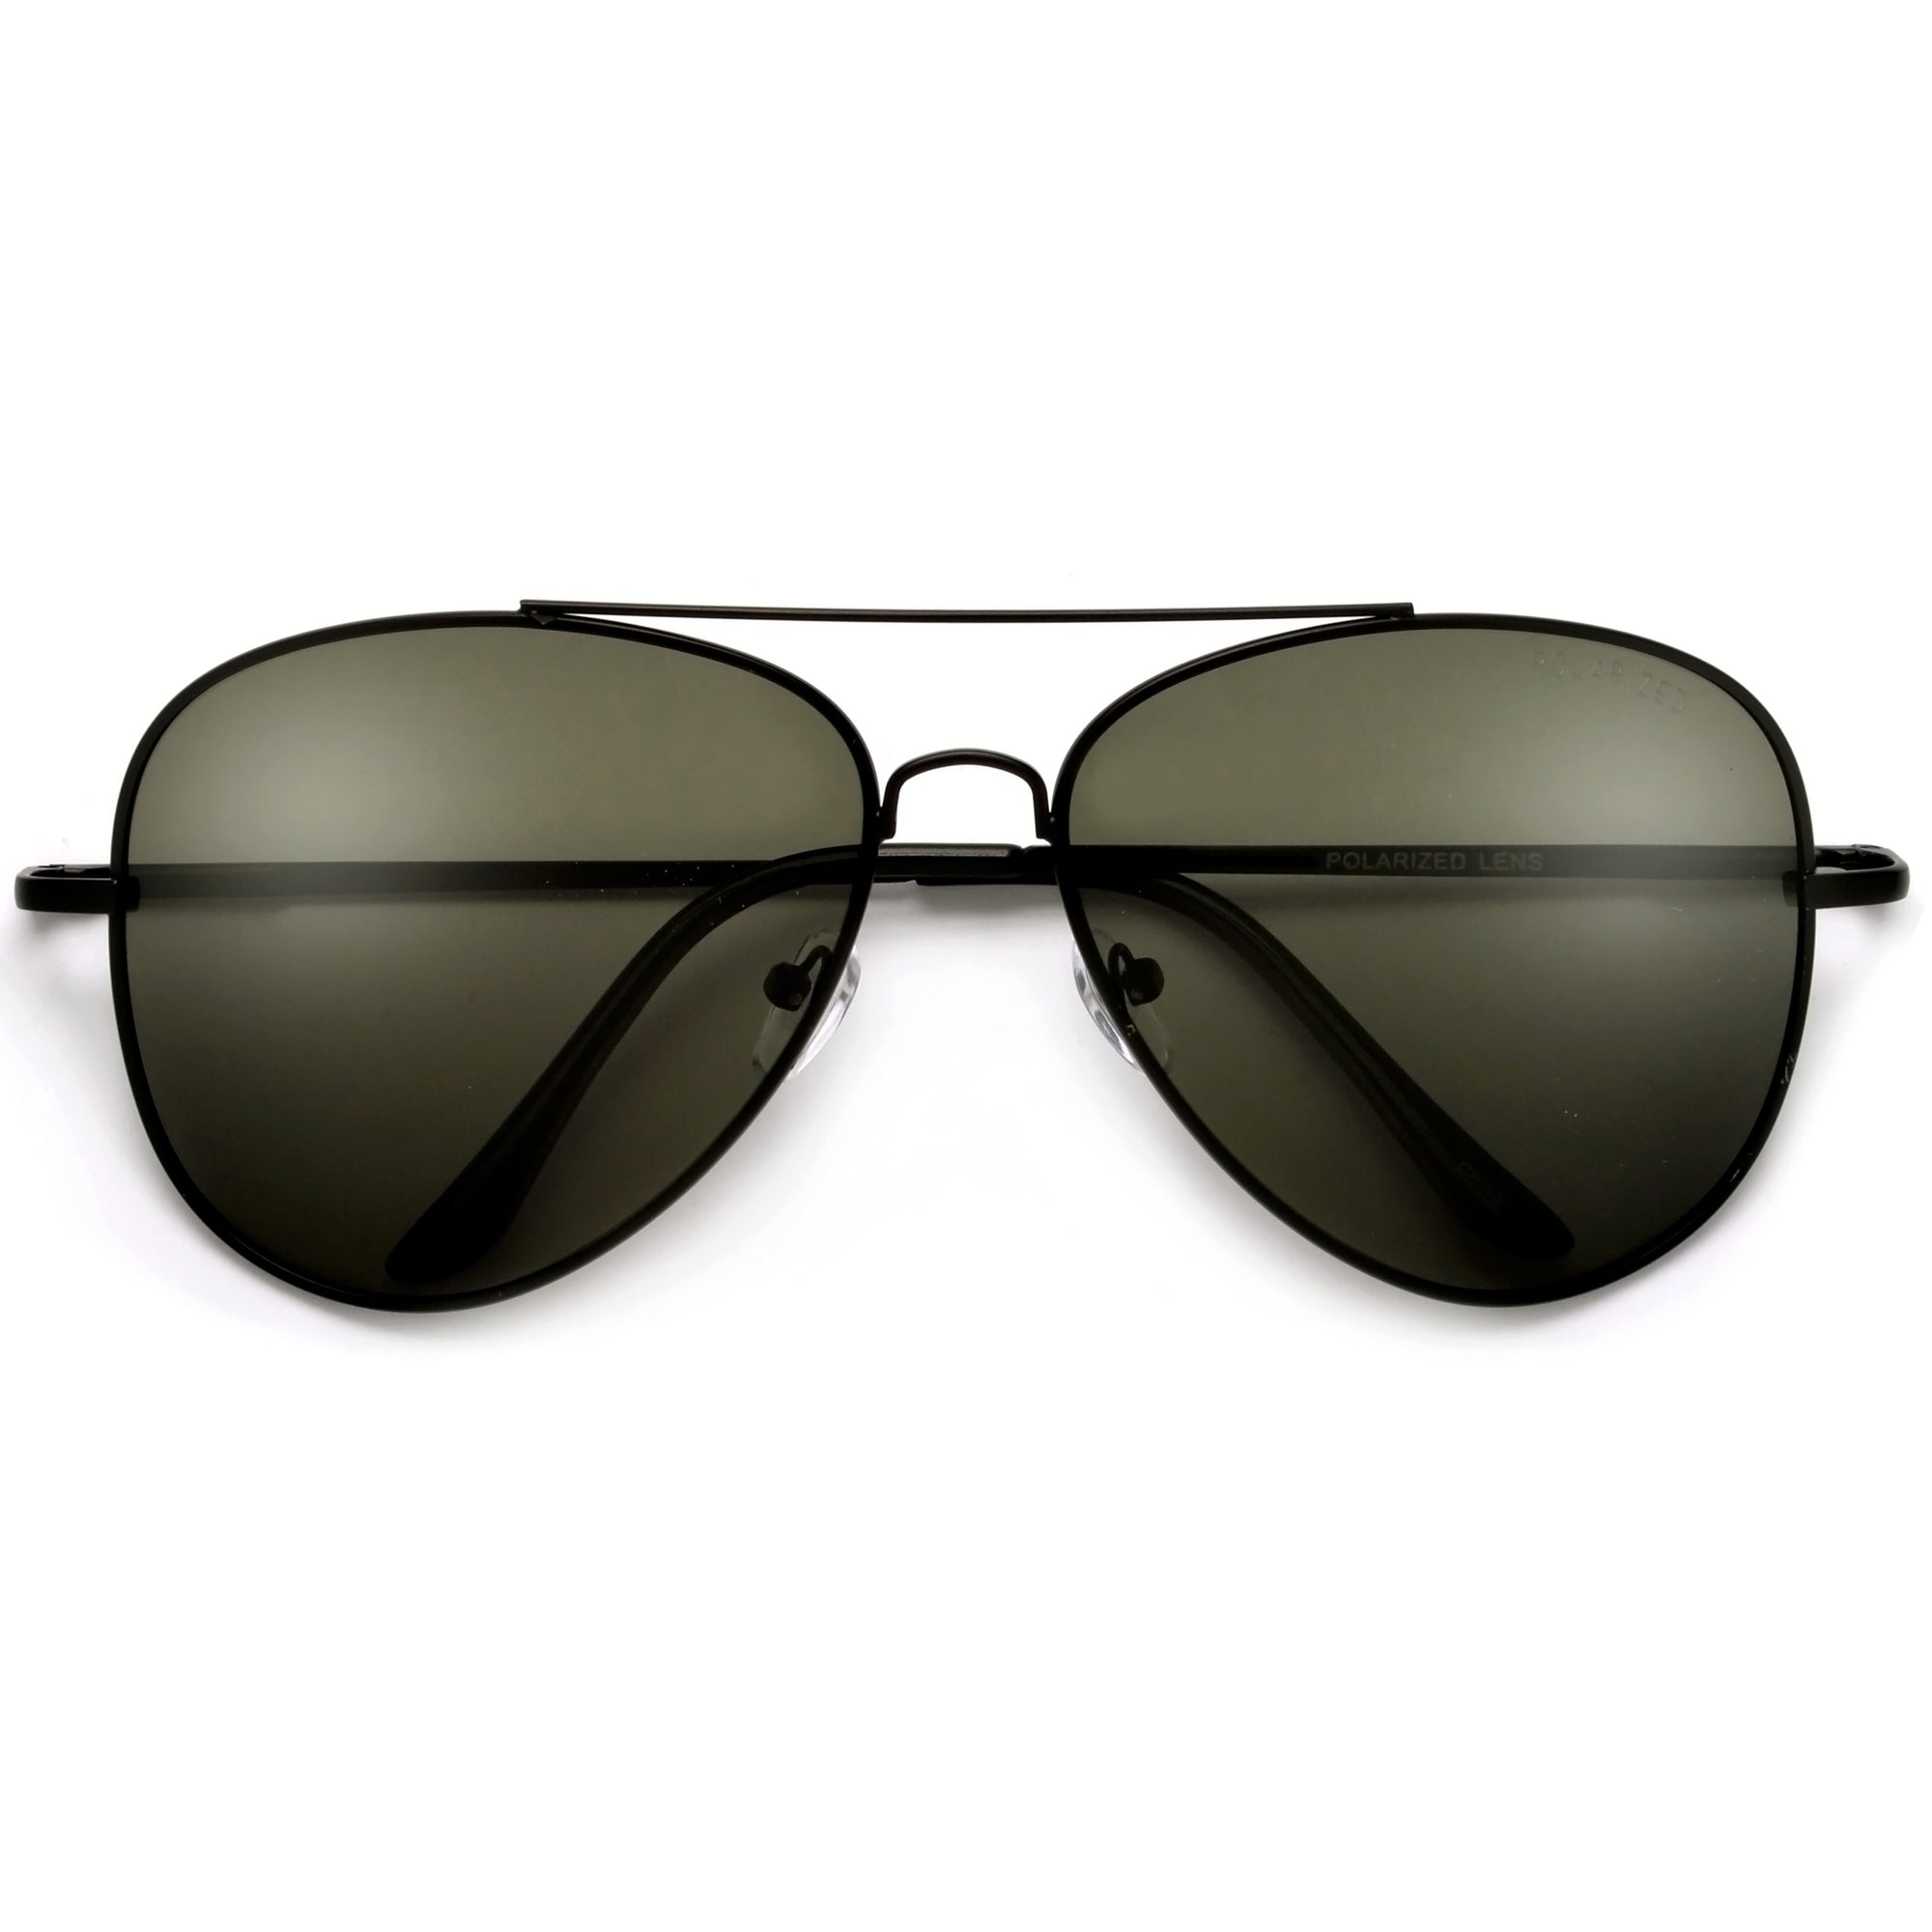 Drop Aviator Sunglasses